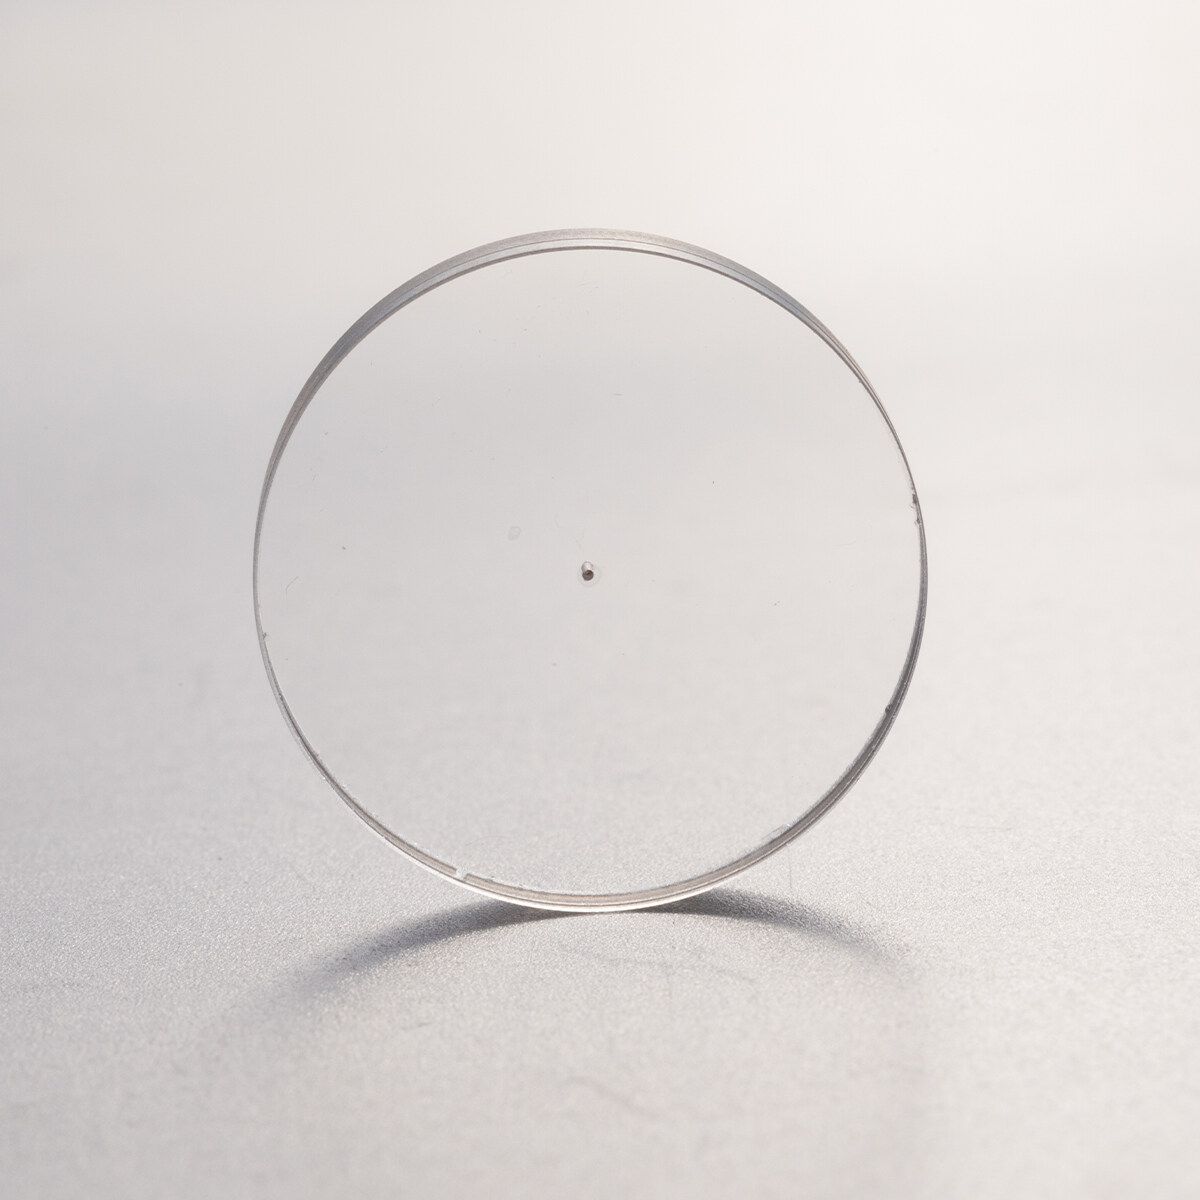 prescription lens manufacturers, precision lens company manufactures sophisticated, high precision glass lens